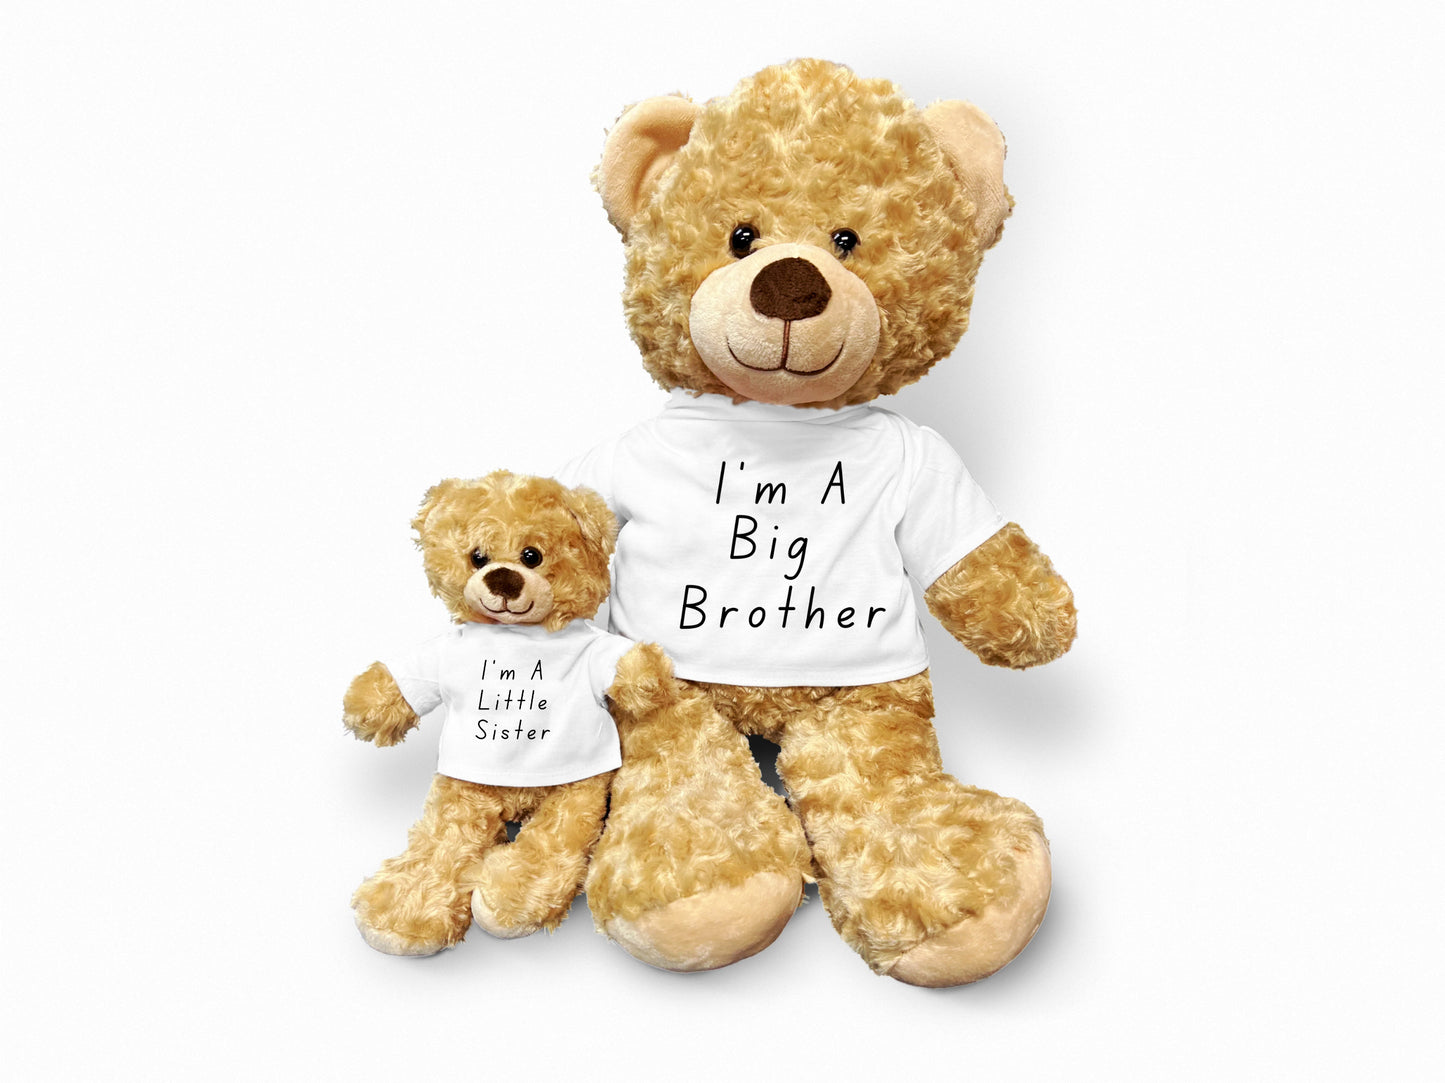 Sibling Teddy Bears, Little Sister, Big Sister, Little Brother, Big Brother, Customize Teddy Bears, Gift for Daughter, Gift for Son